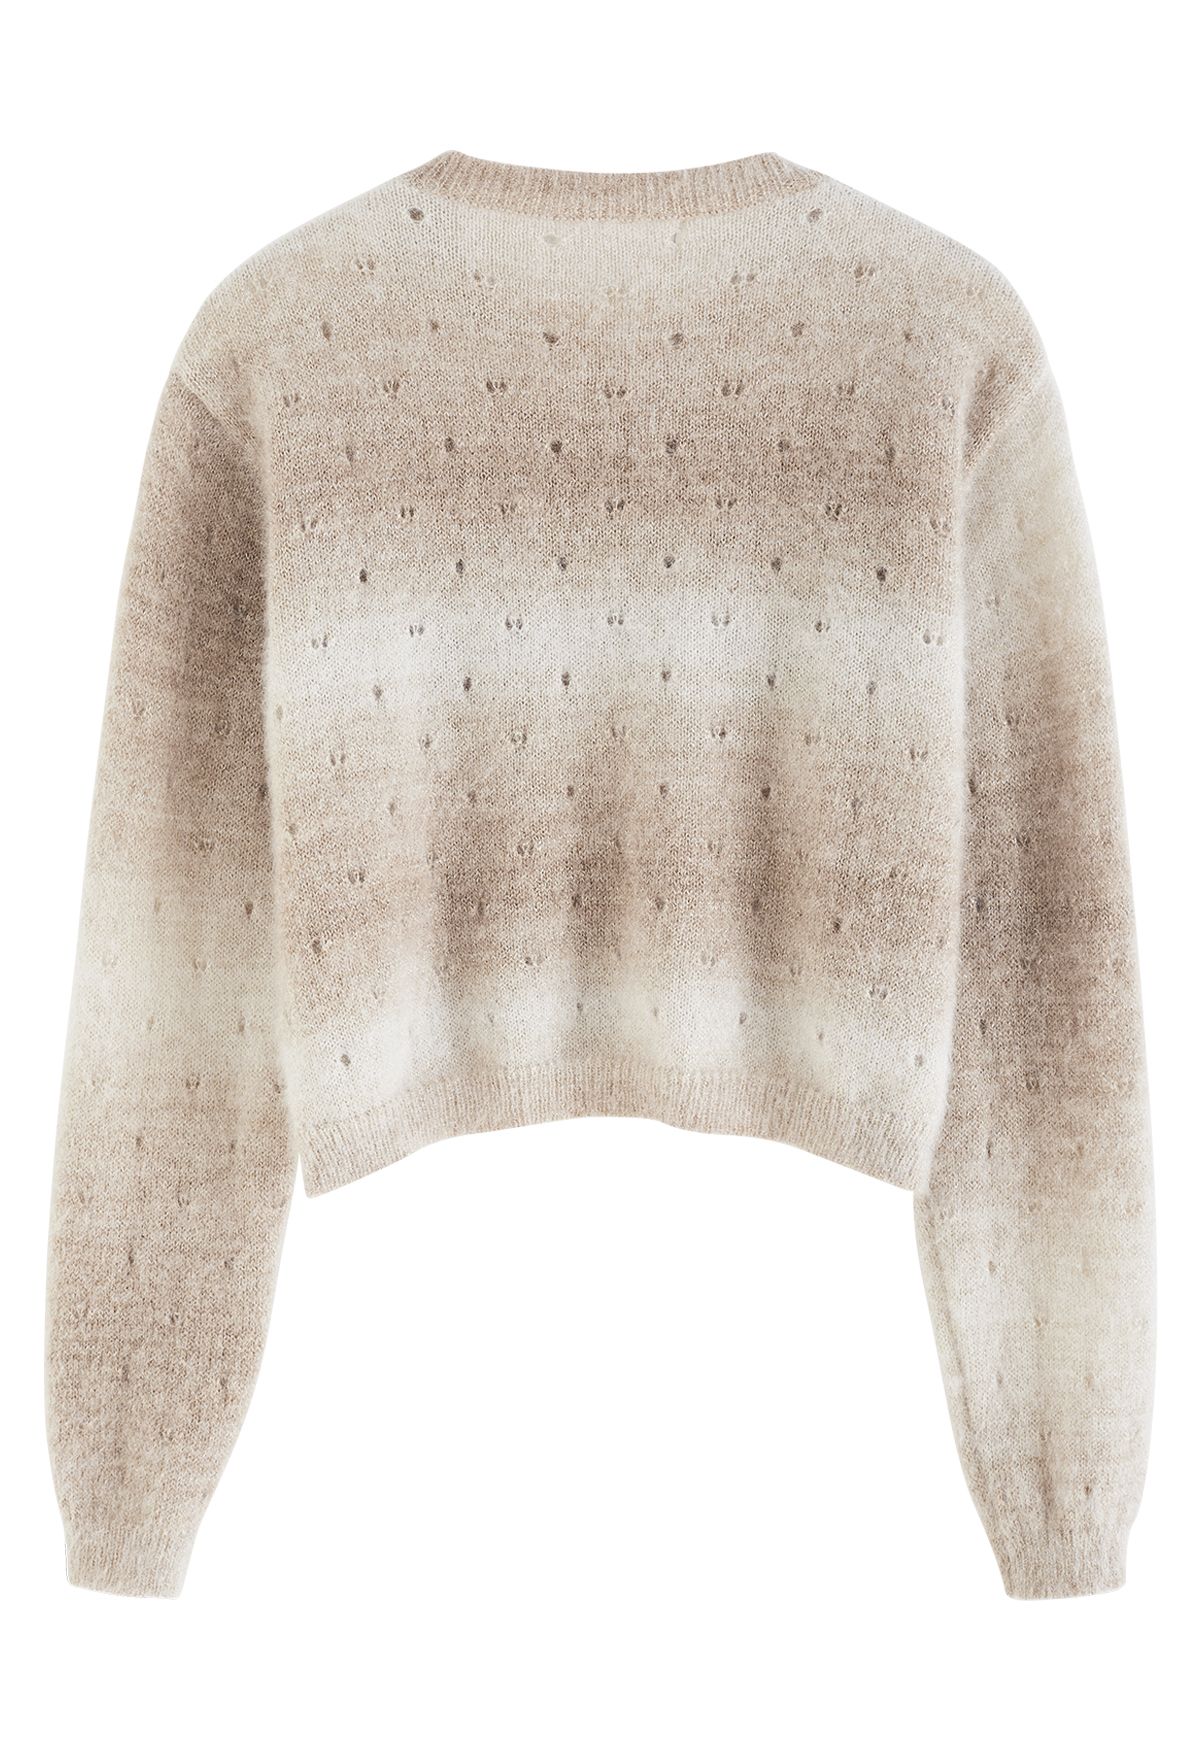 Ombre Eyelet Fuzzy Crop Sweater in Light Tan